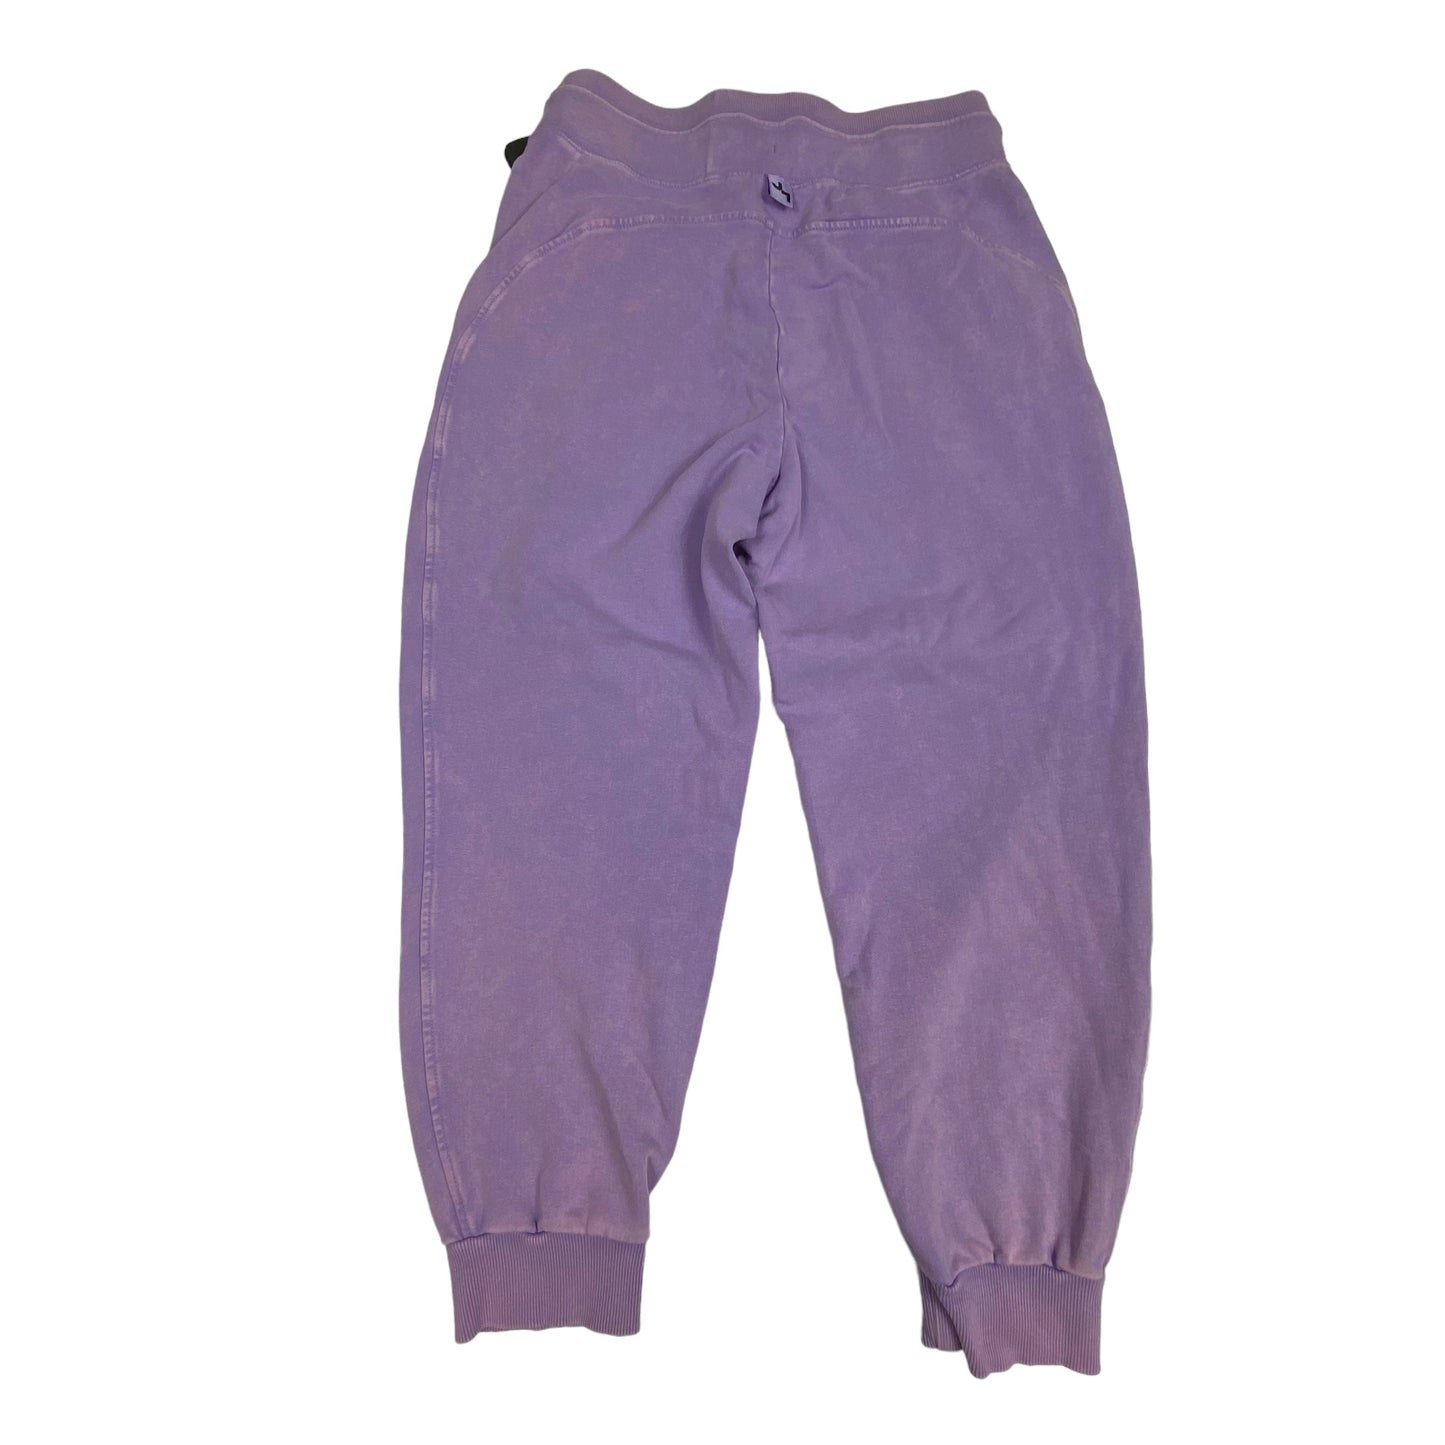 Athletic Pants By Joy Lab  Size: S